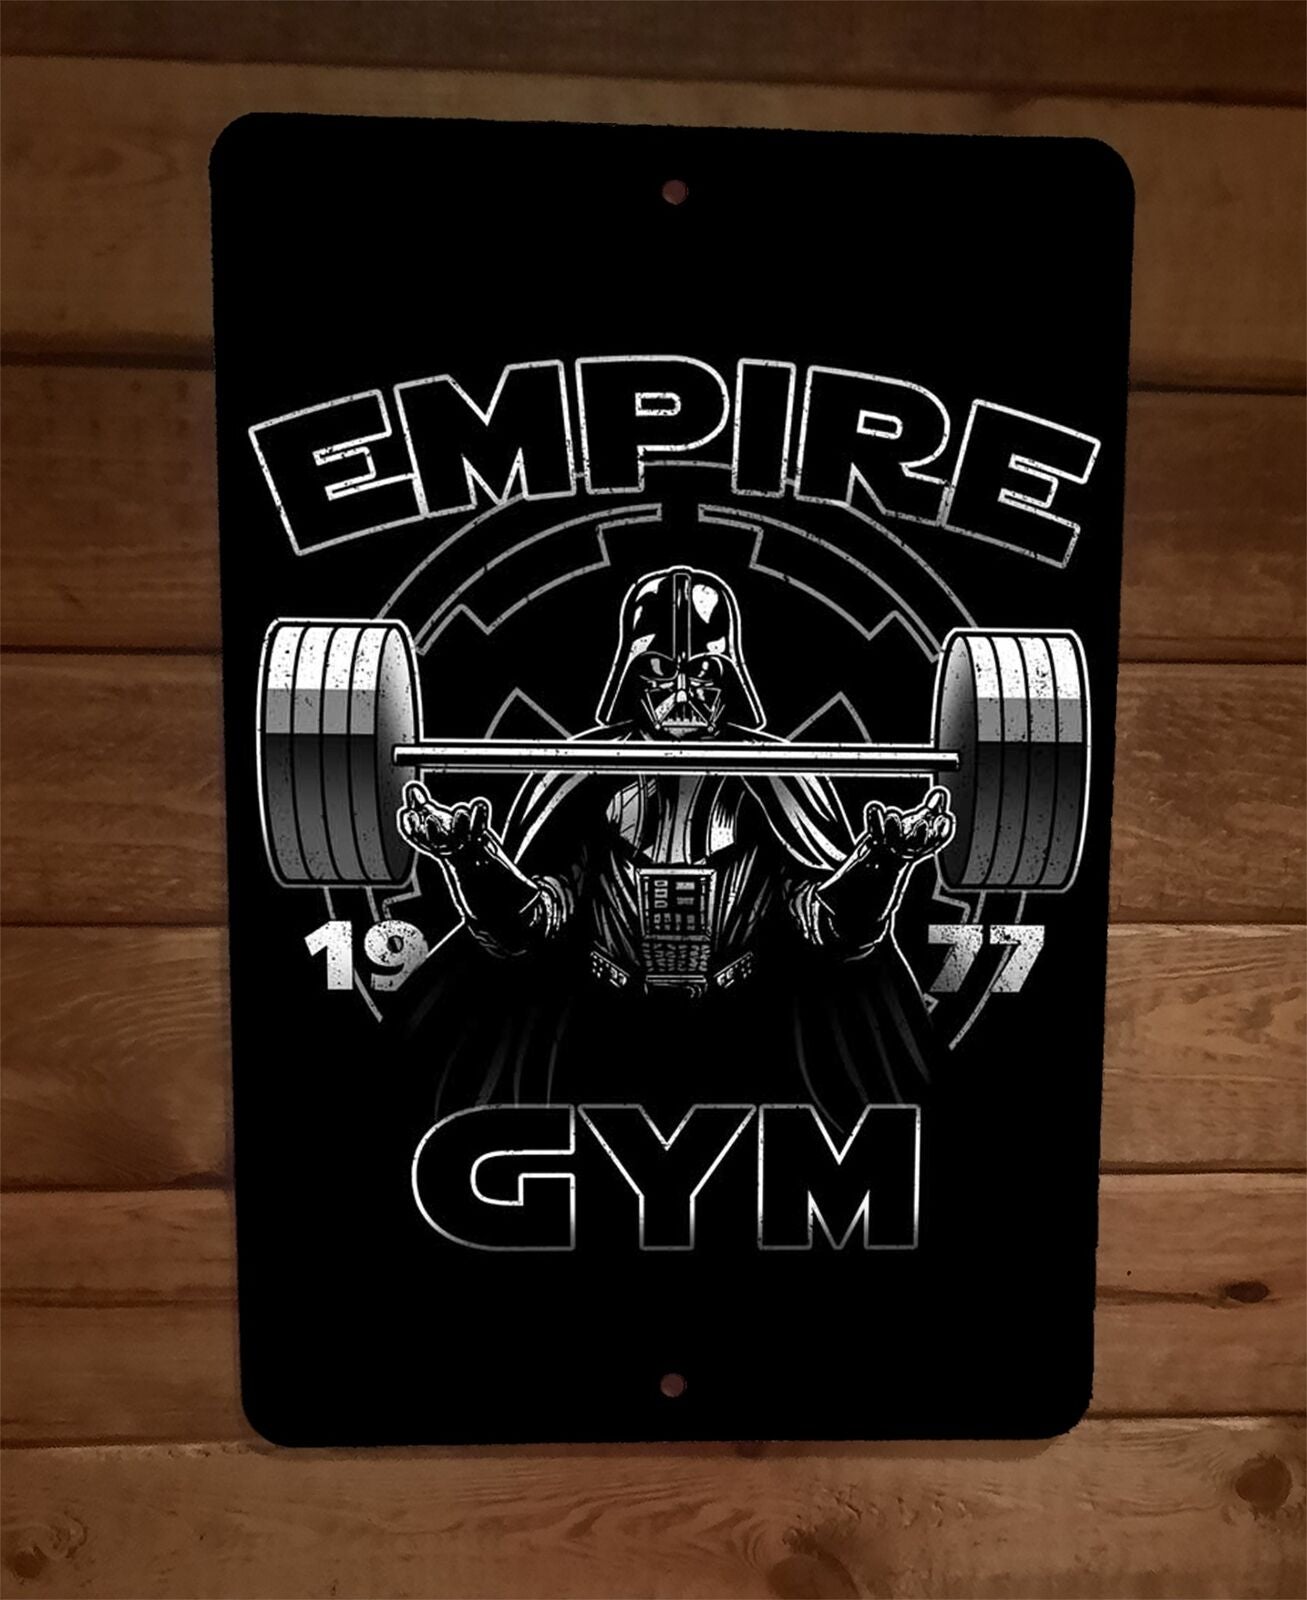 Empire Gym Darth Vader 8x12 Metal Wall Star Wars Sign Poster